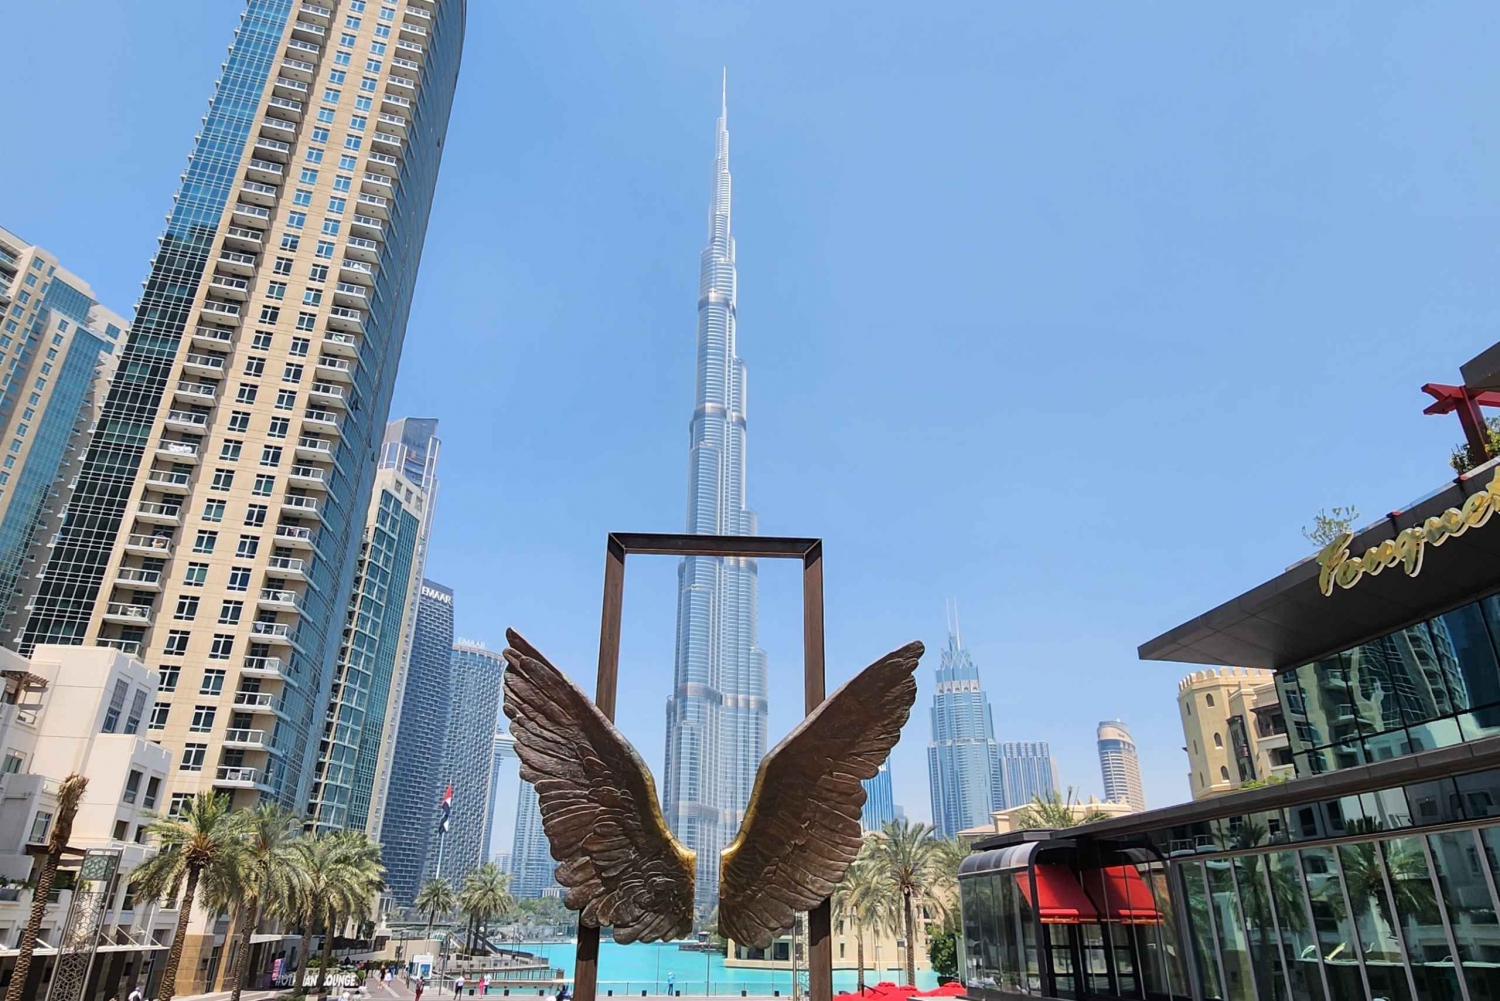 Dubai: Half-Day Highlights Tour with Aquarium and Souks